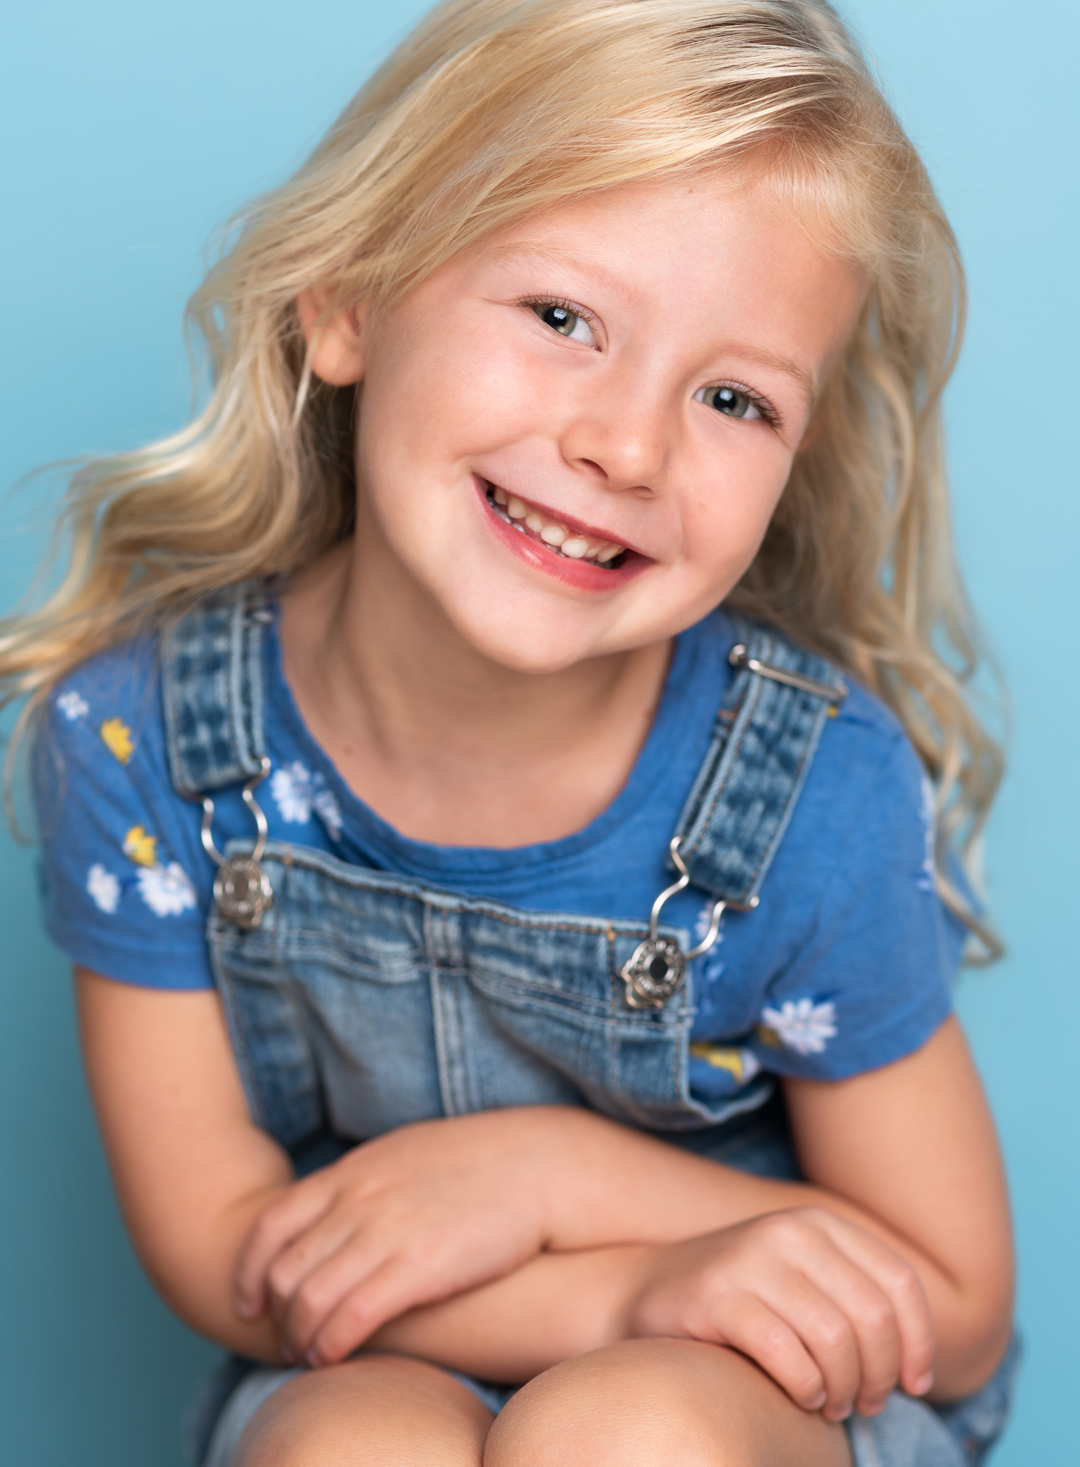 Blonde 4 year old child actress smiling headshot